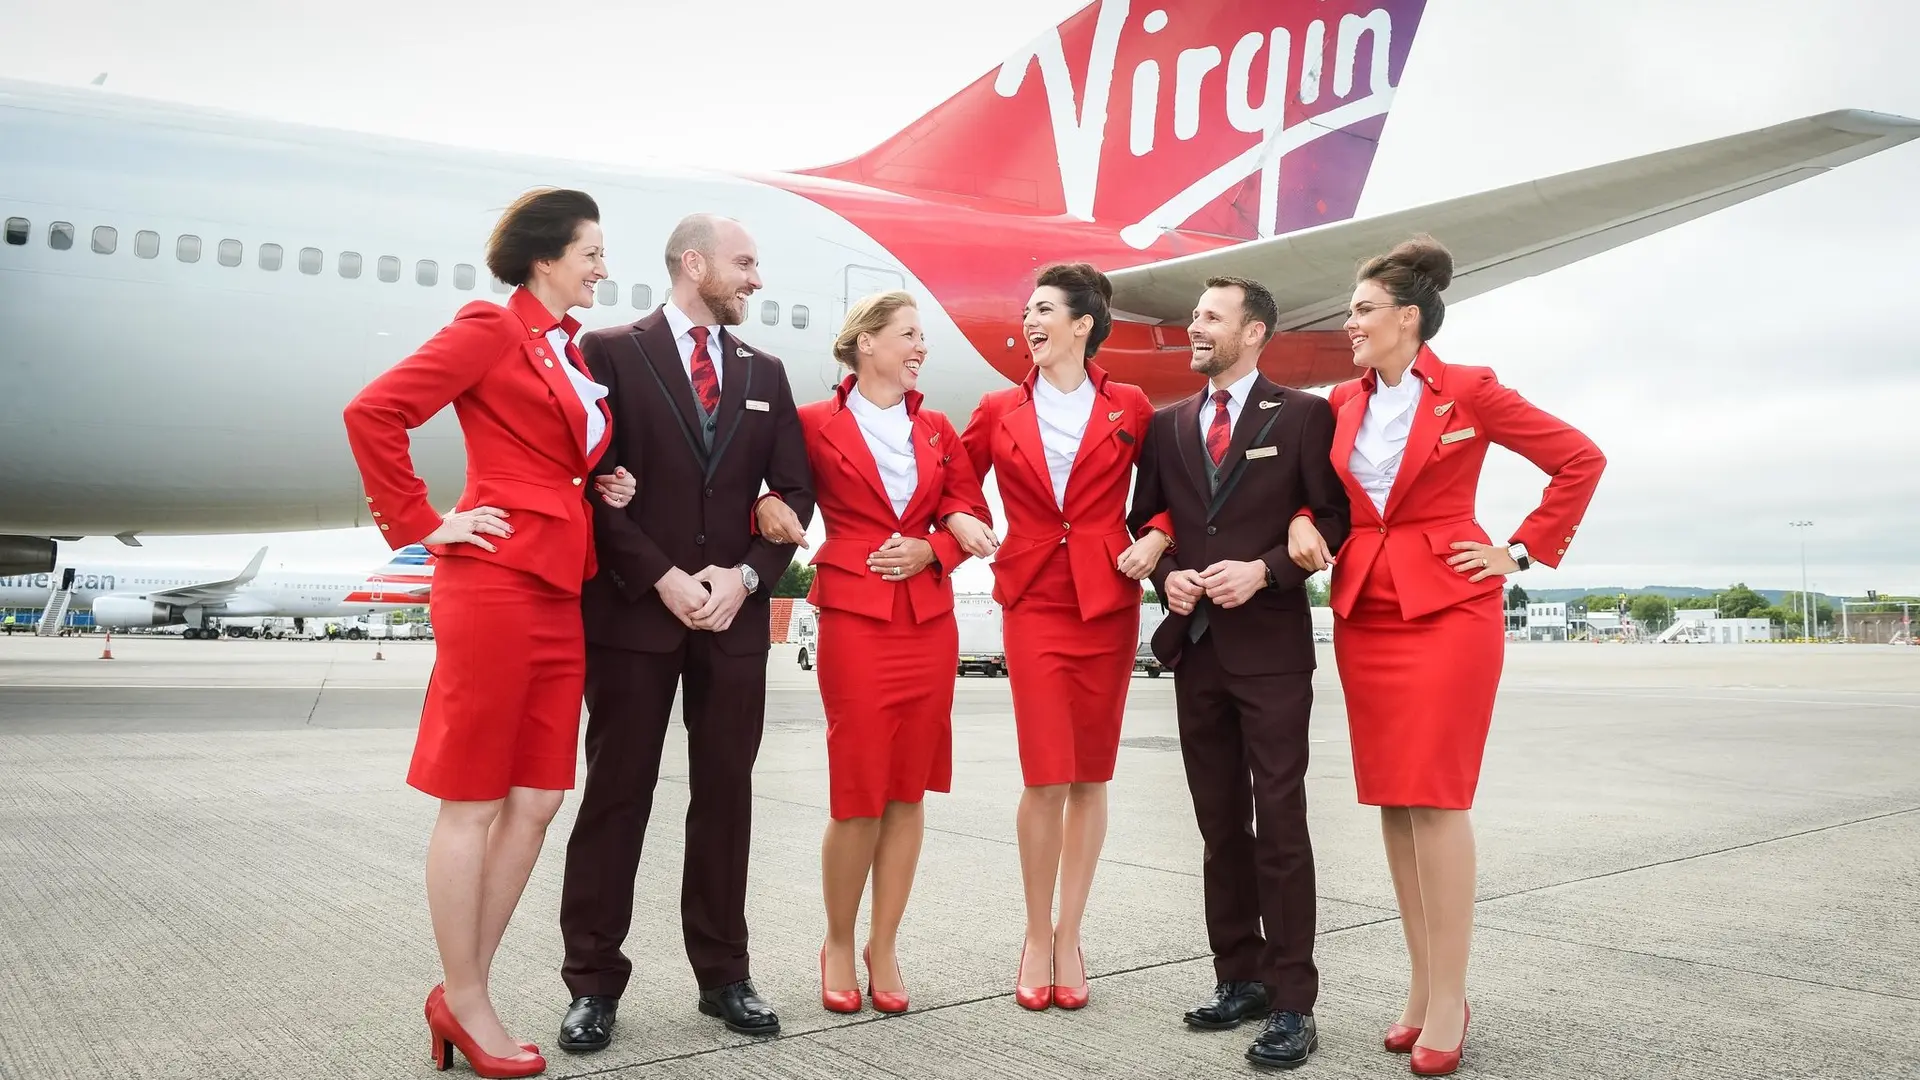 Airline review Service - Virgin Atlantic - 2